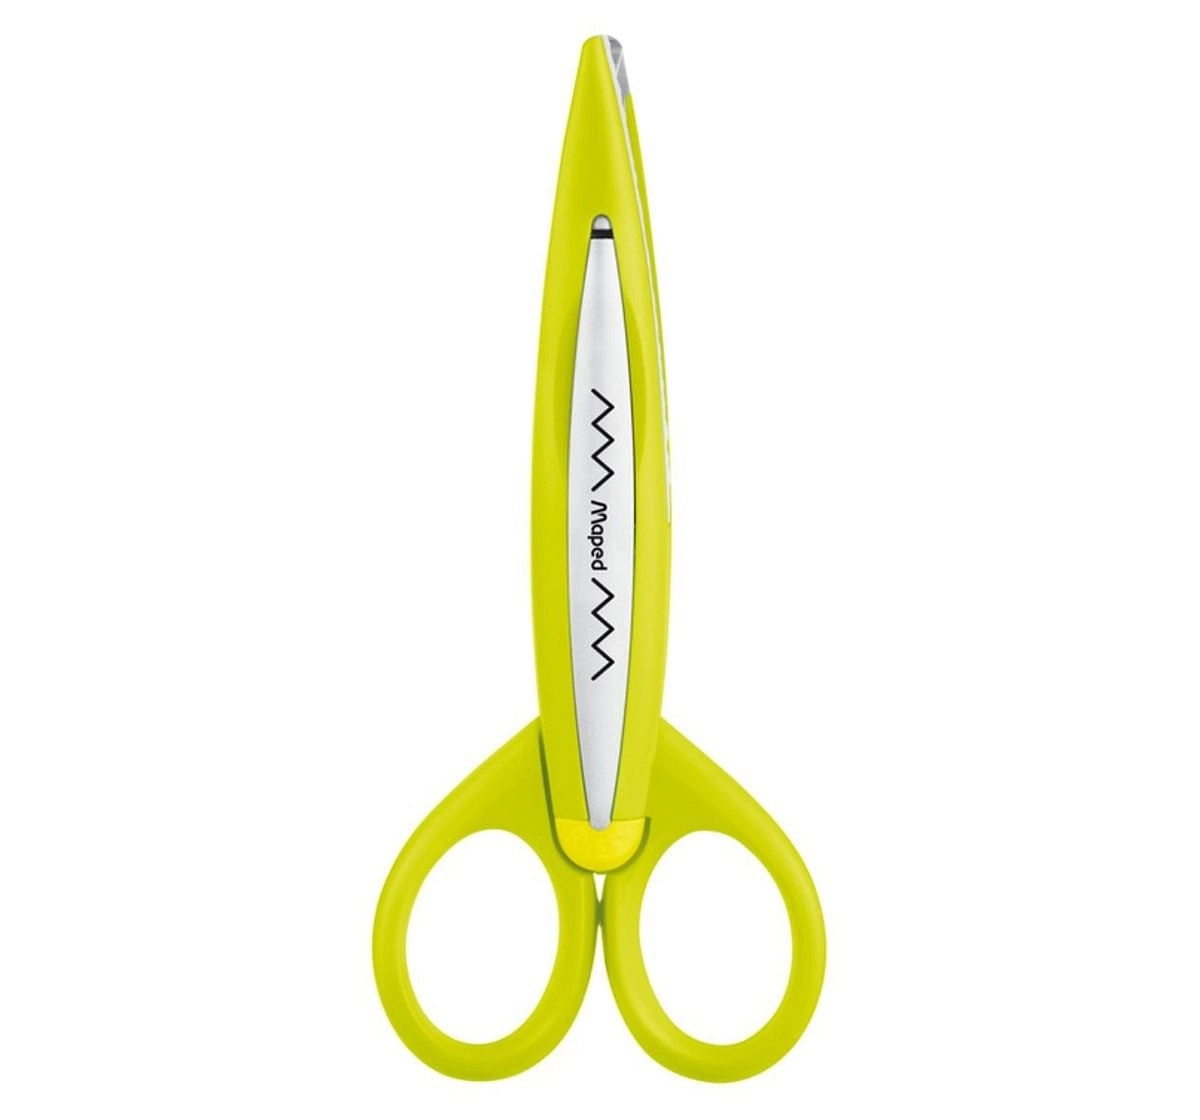 Maped Craft 2 Scissor 10 Blade, 7Y+ (Yellow)